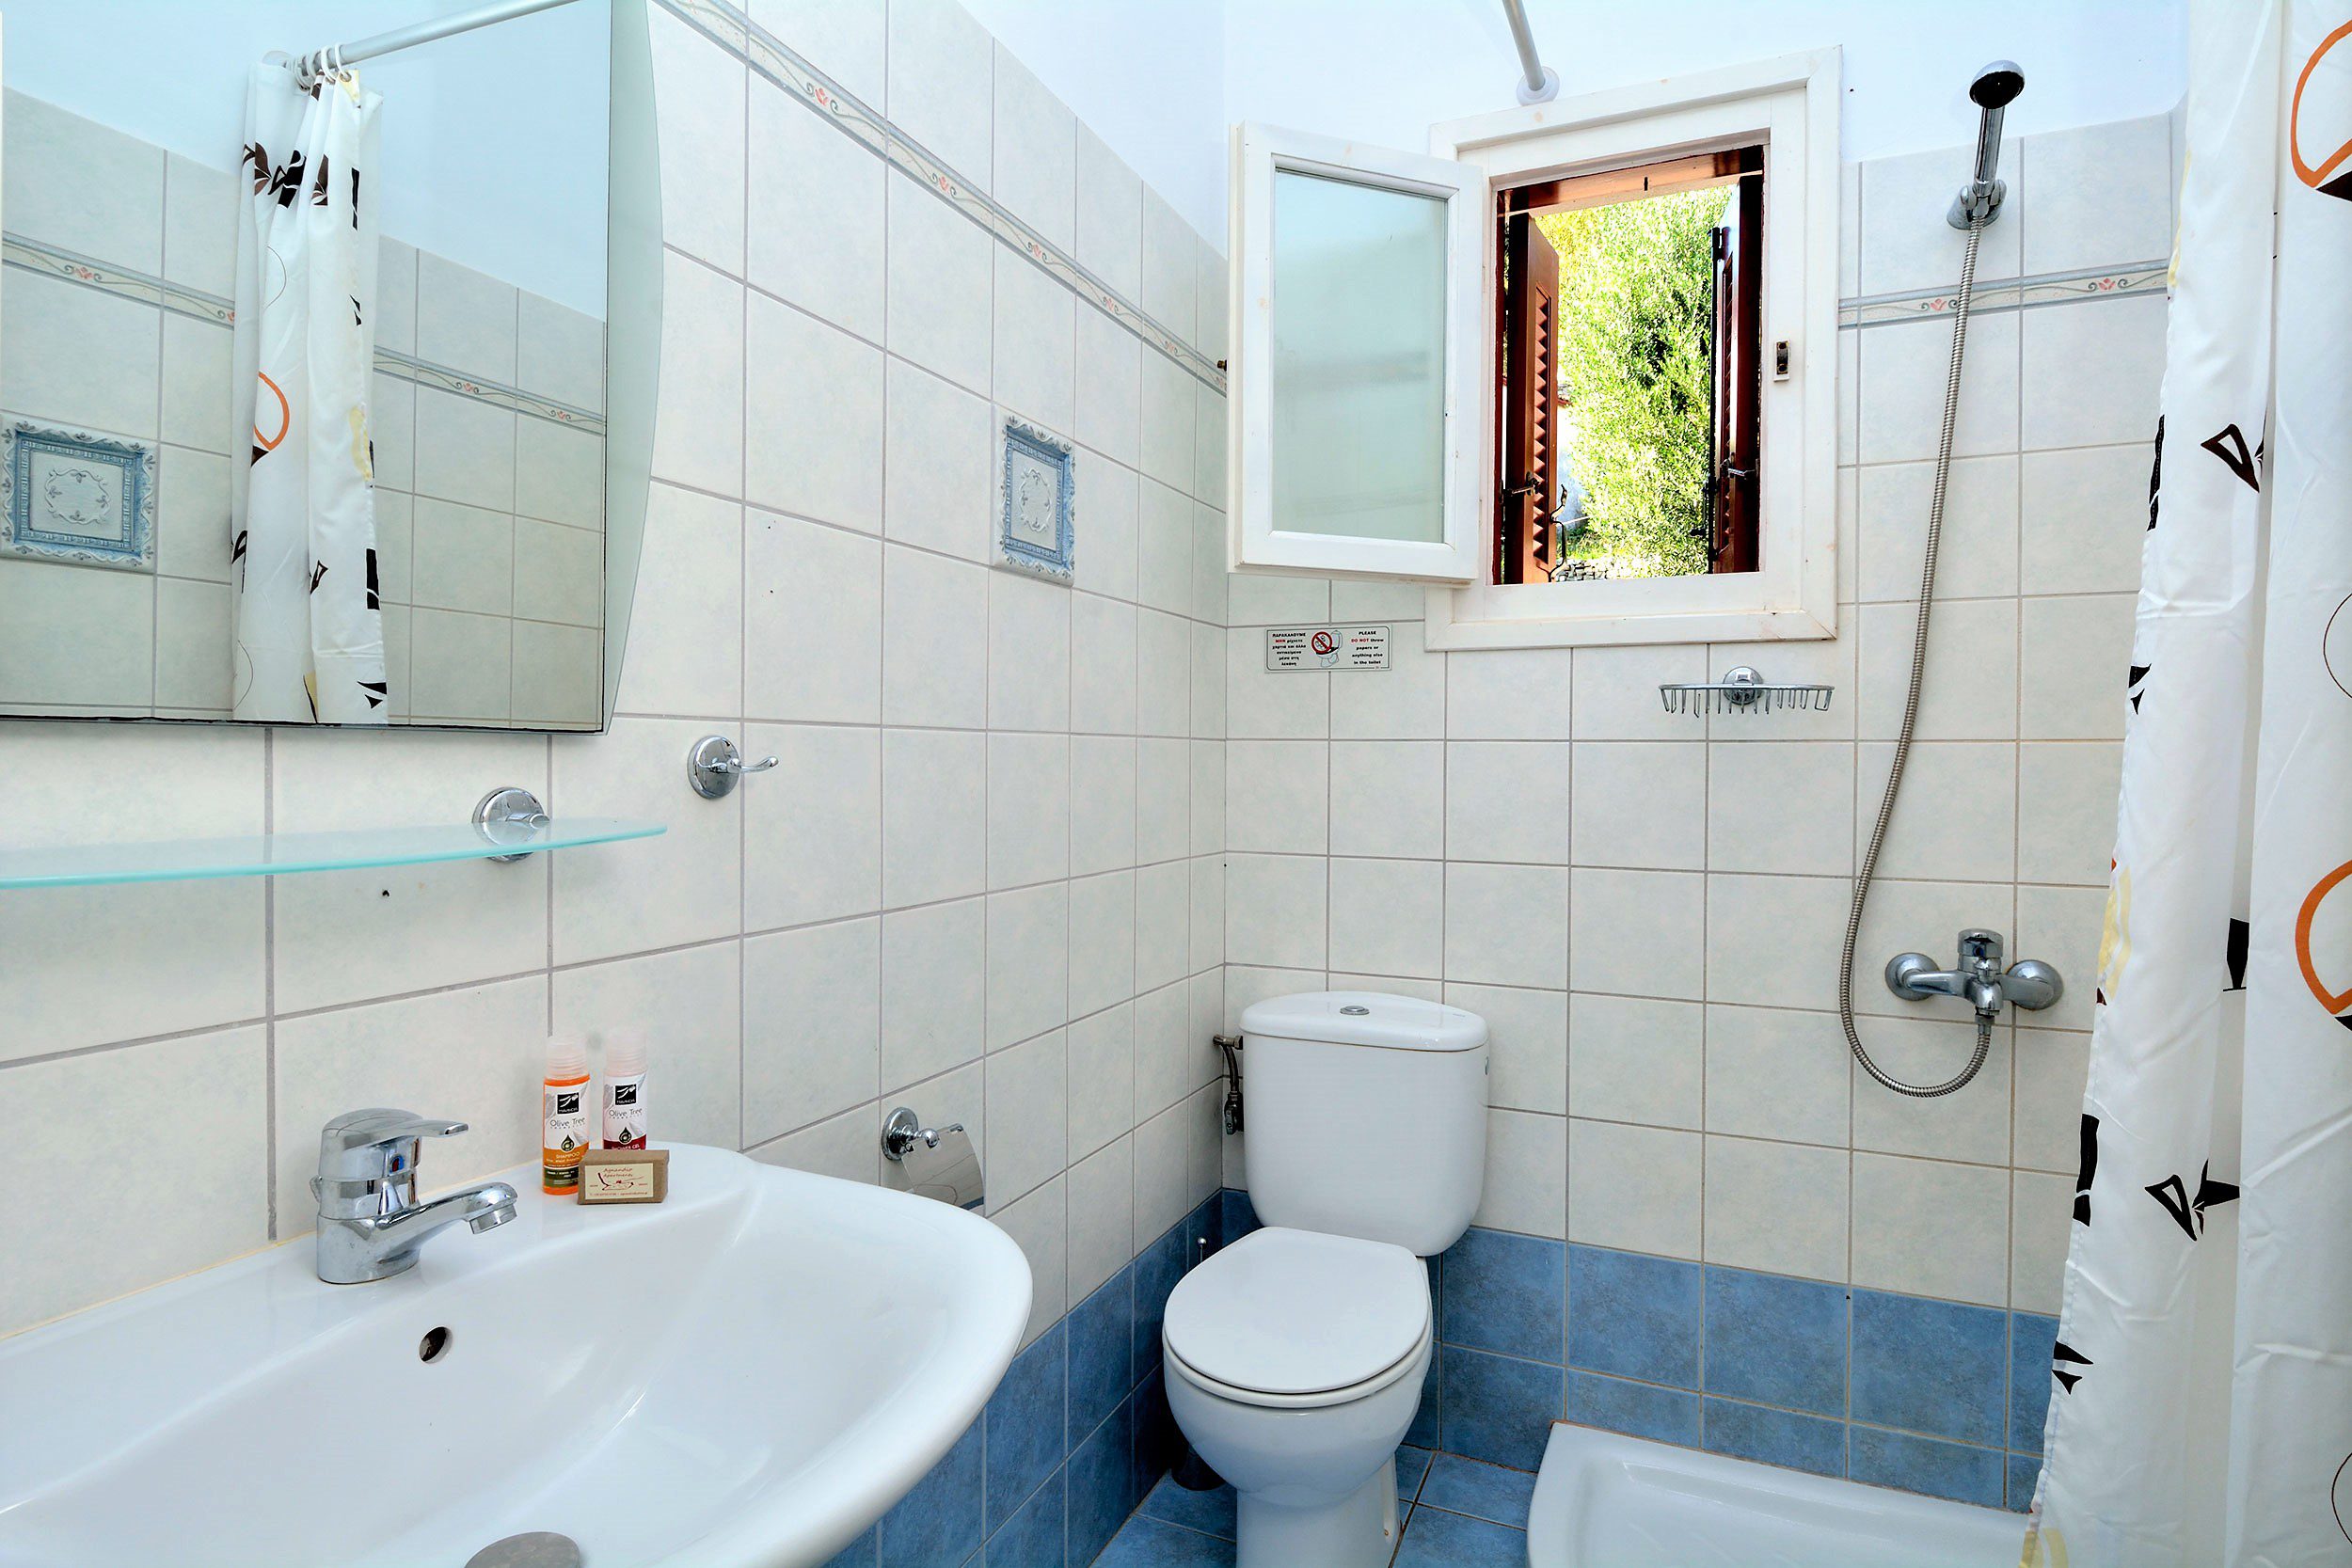 Interior bathroom from holiday apartments Kioni, Ithaca Greece